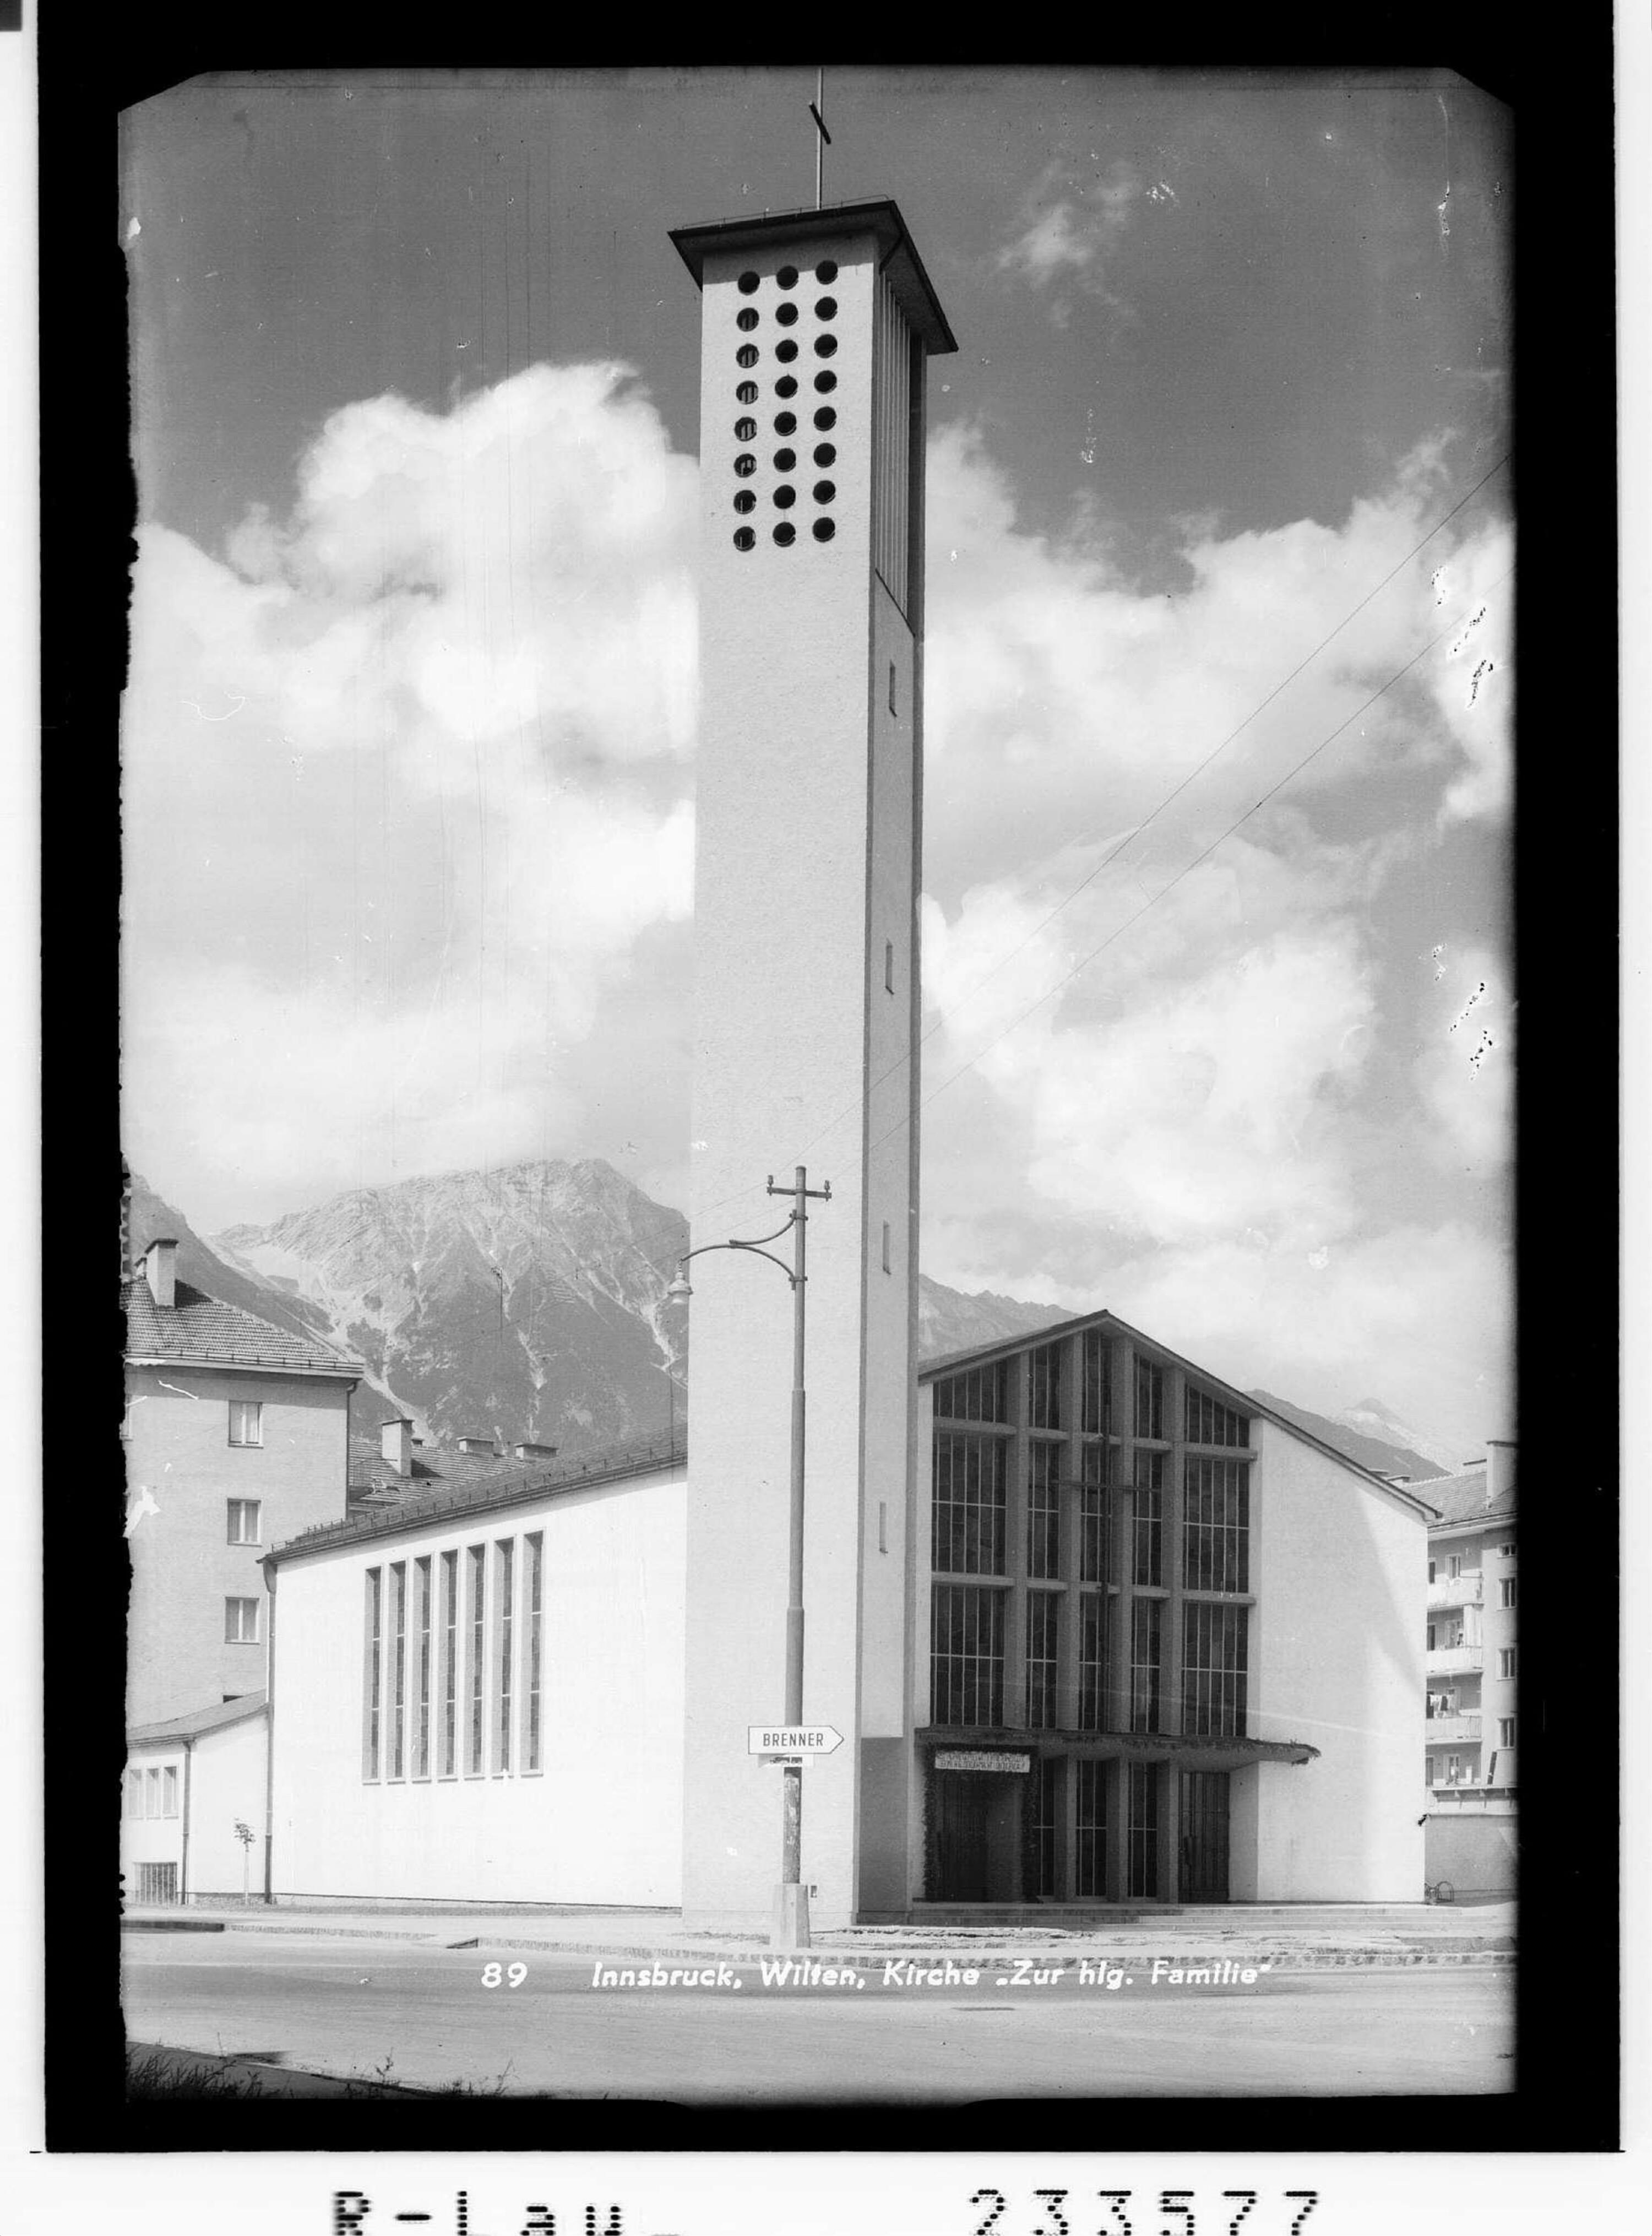 Innsbruck, Wilten, Kirche zur heiligen Familie></div>


    <hr>
    <div class=